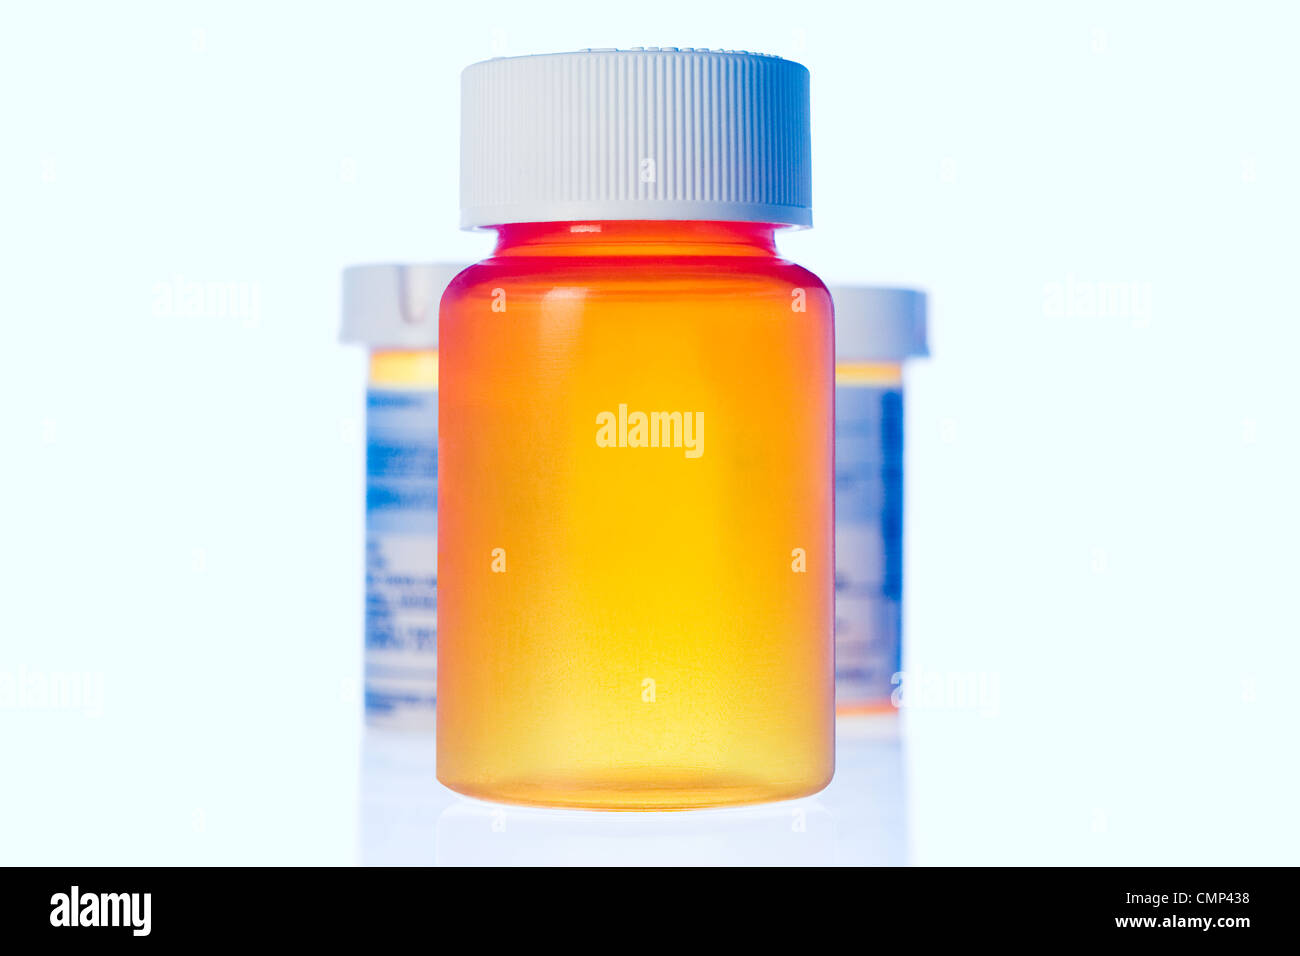 Three upright orange pill bottles in powder blue light on transparent surface. Large foreground empty bottle. Stock Photo